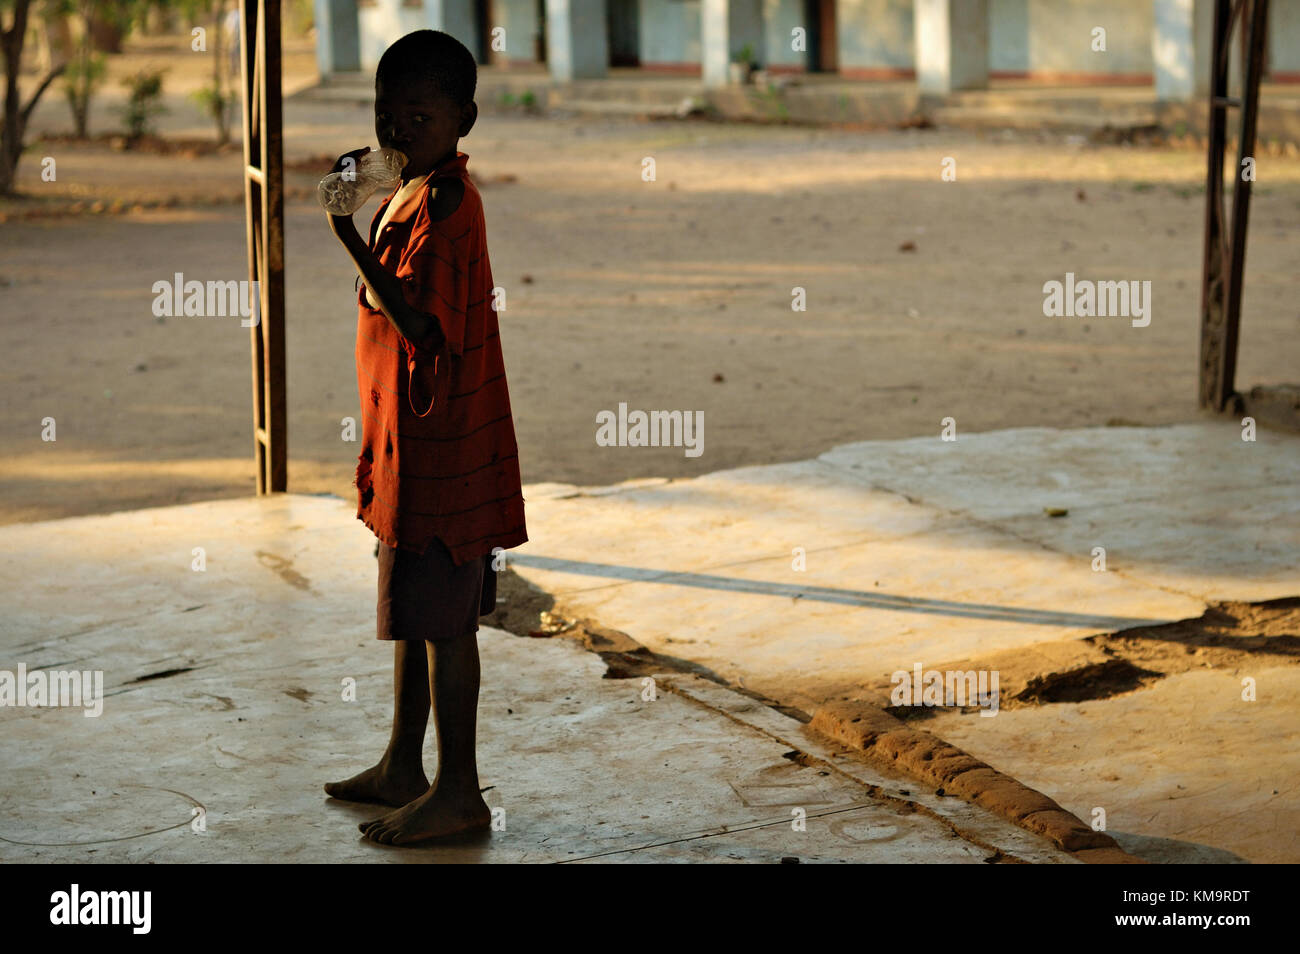 Boy with a plastic bottle in Kawaza village, Eastern Province, Zambia Stock Photo